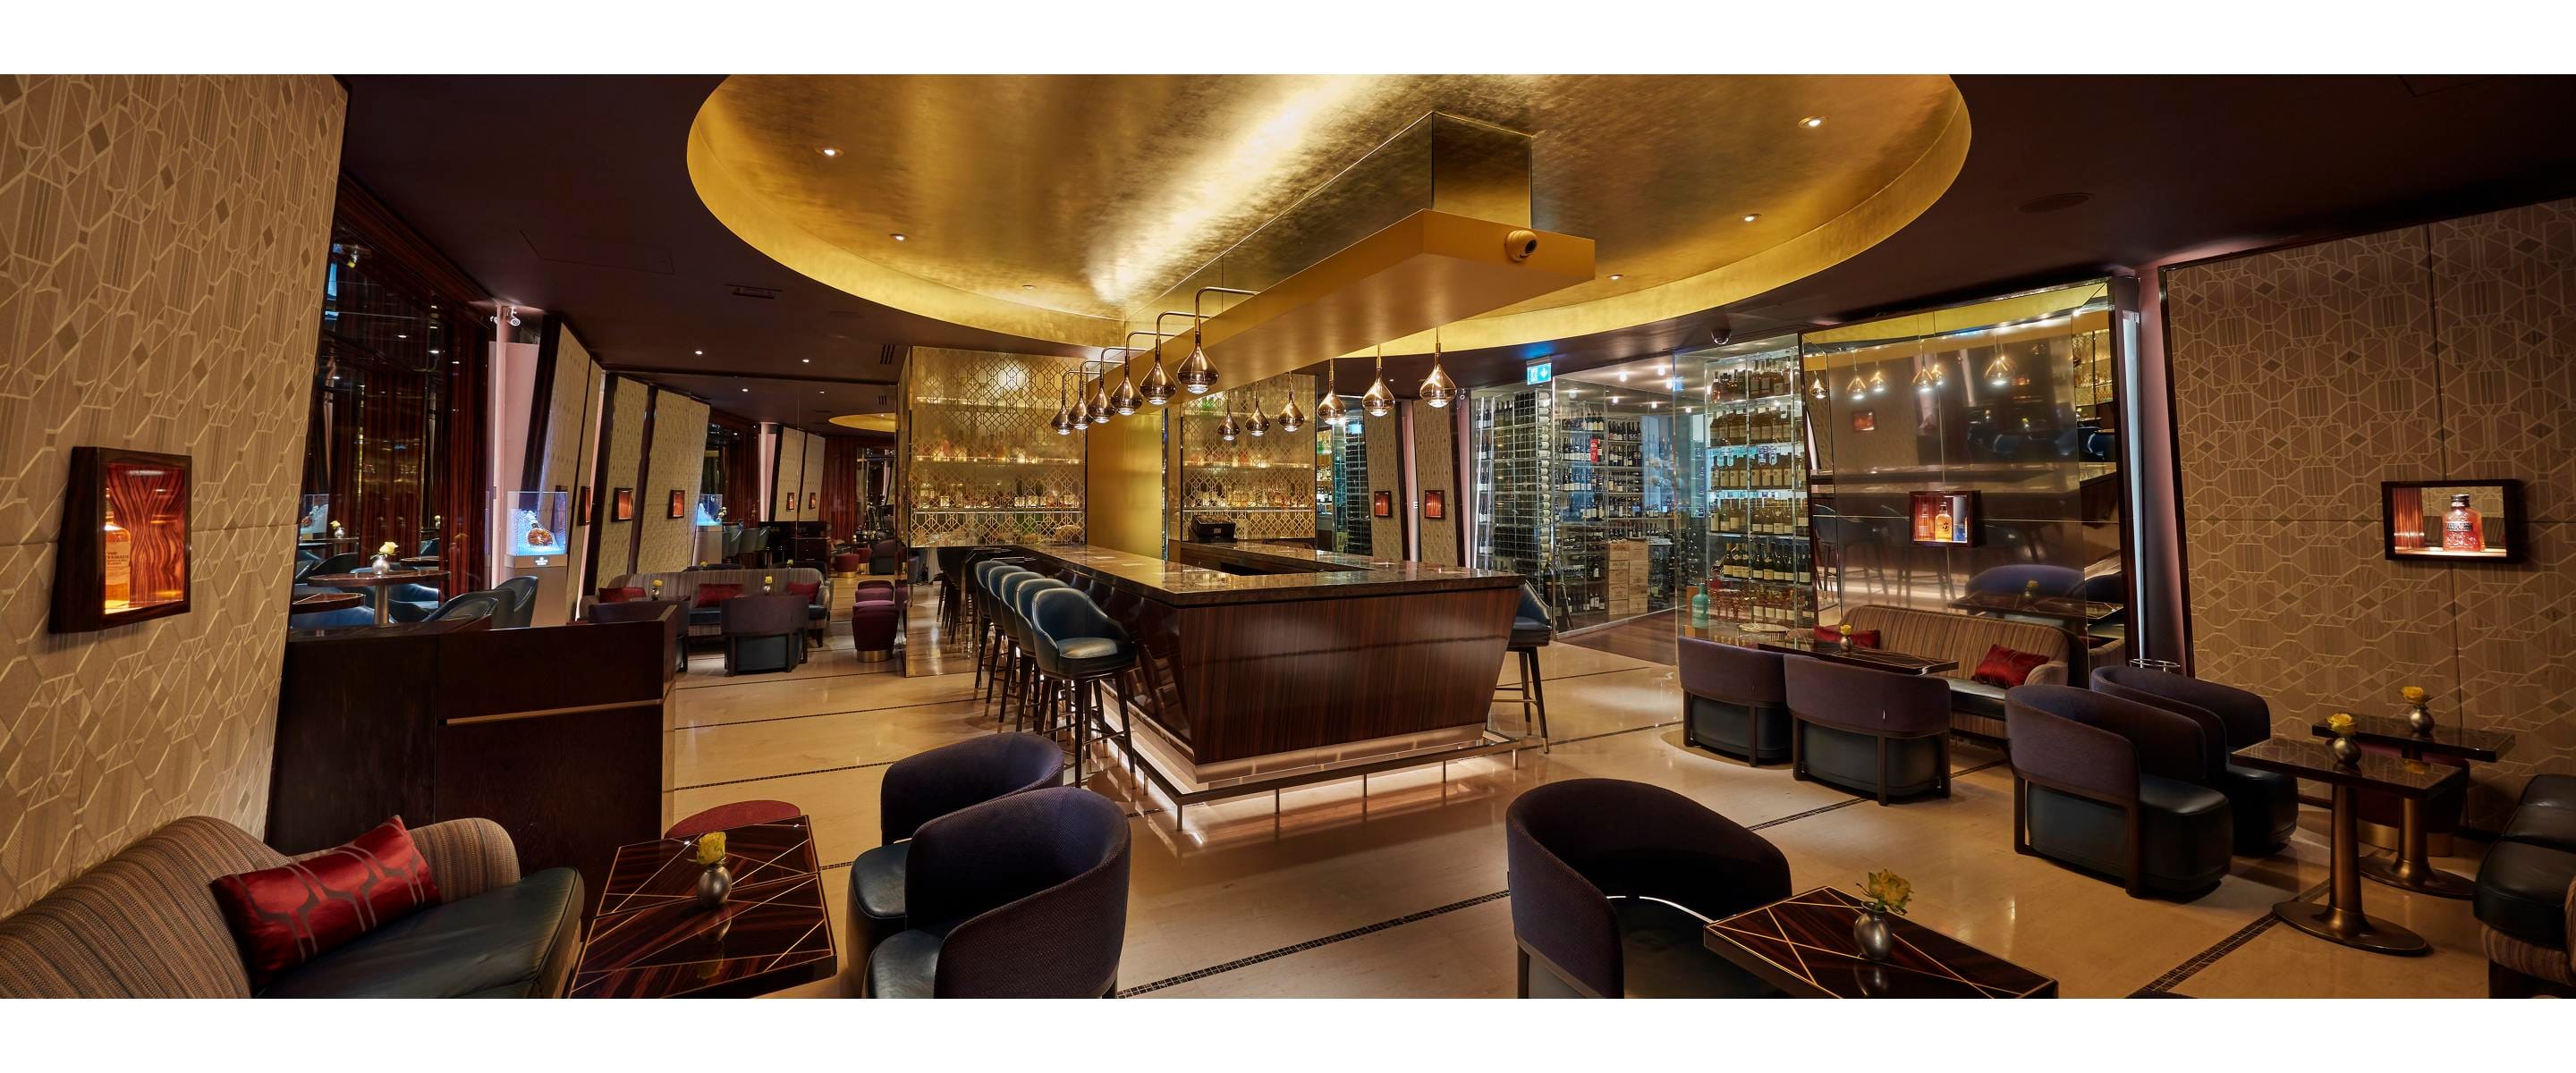 Best Restaurants, Bars & Lounges | Mandarin Oriental, London